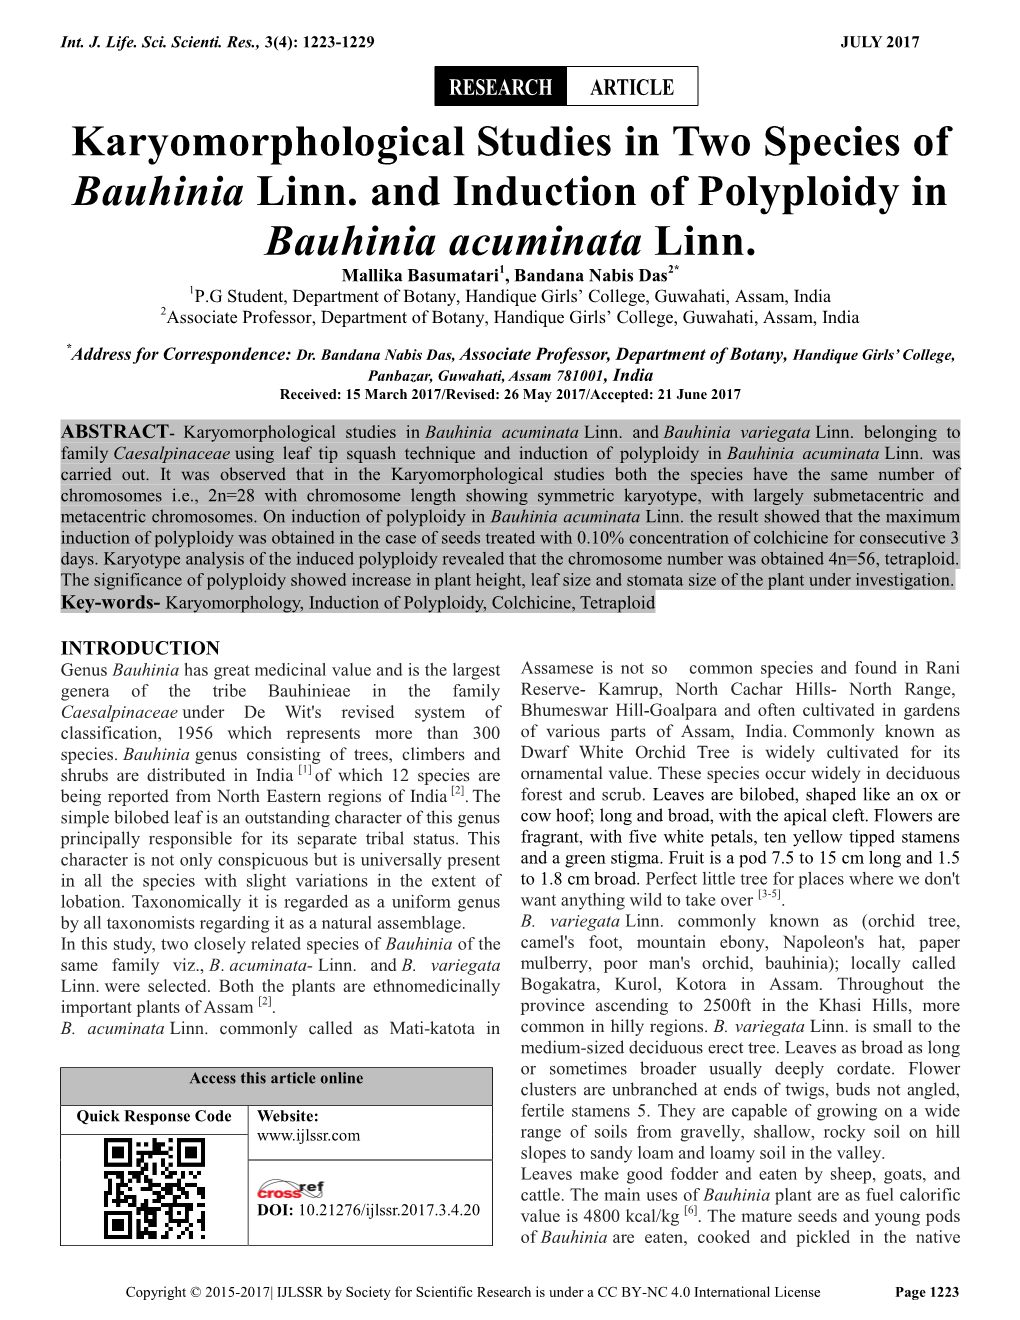 Karyomorphological Studies in Two Species of Bauhinia Linn. and Induction of Polyploidy in Bauhinia Acuminata Linn